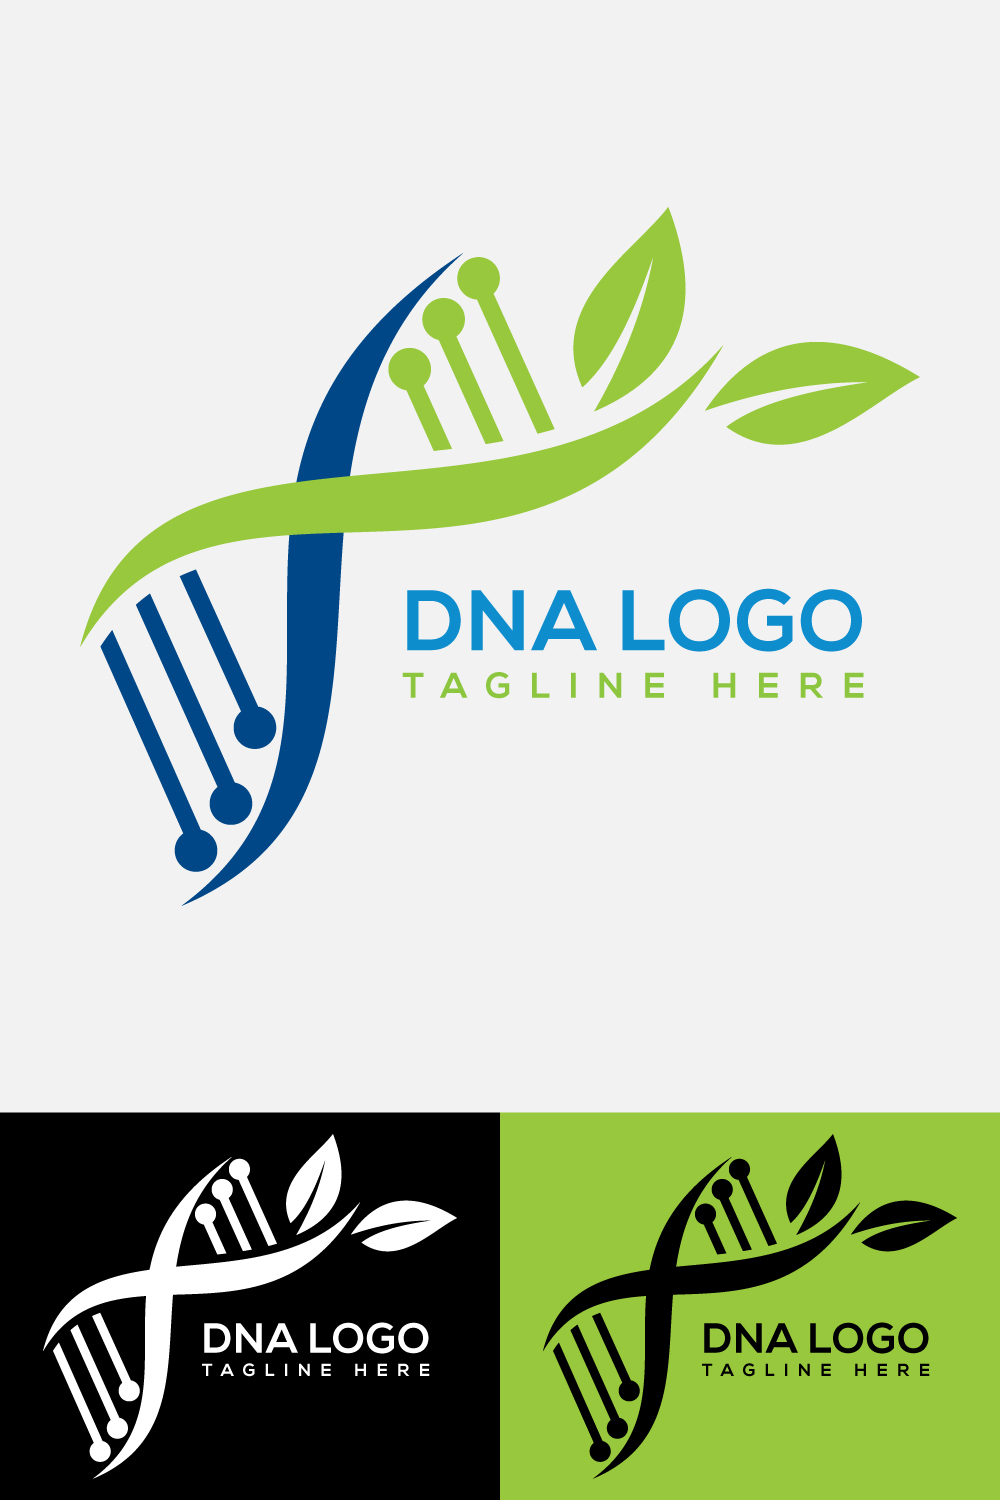 Bundle of images of irresistible DNA shape logos.